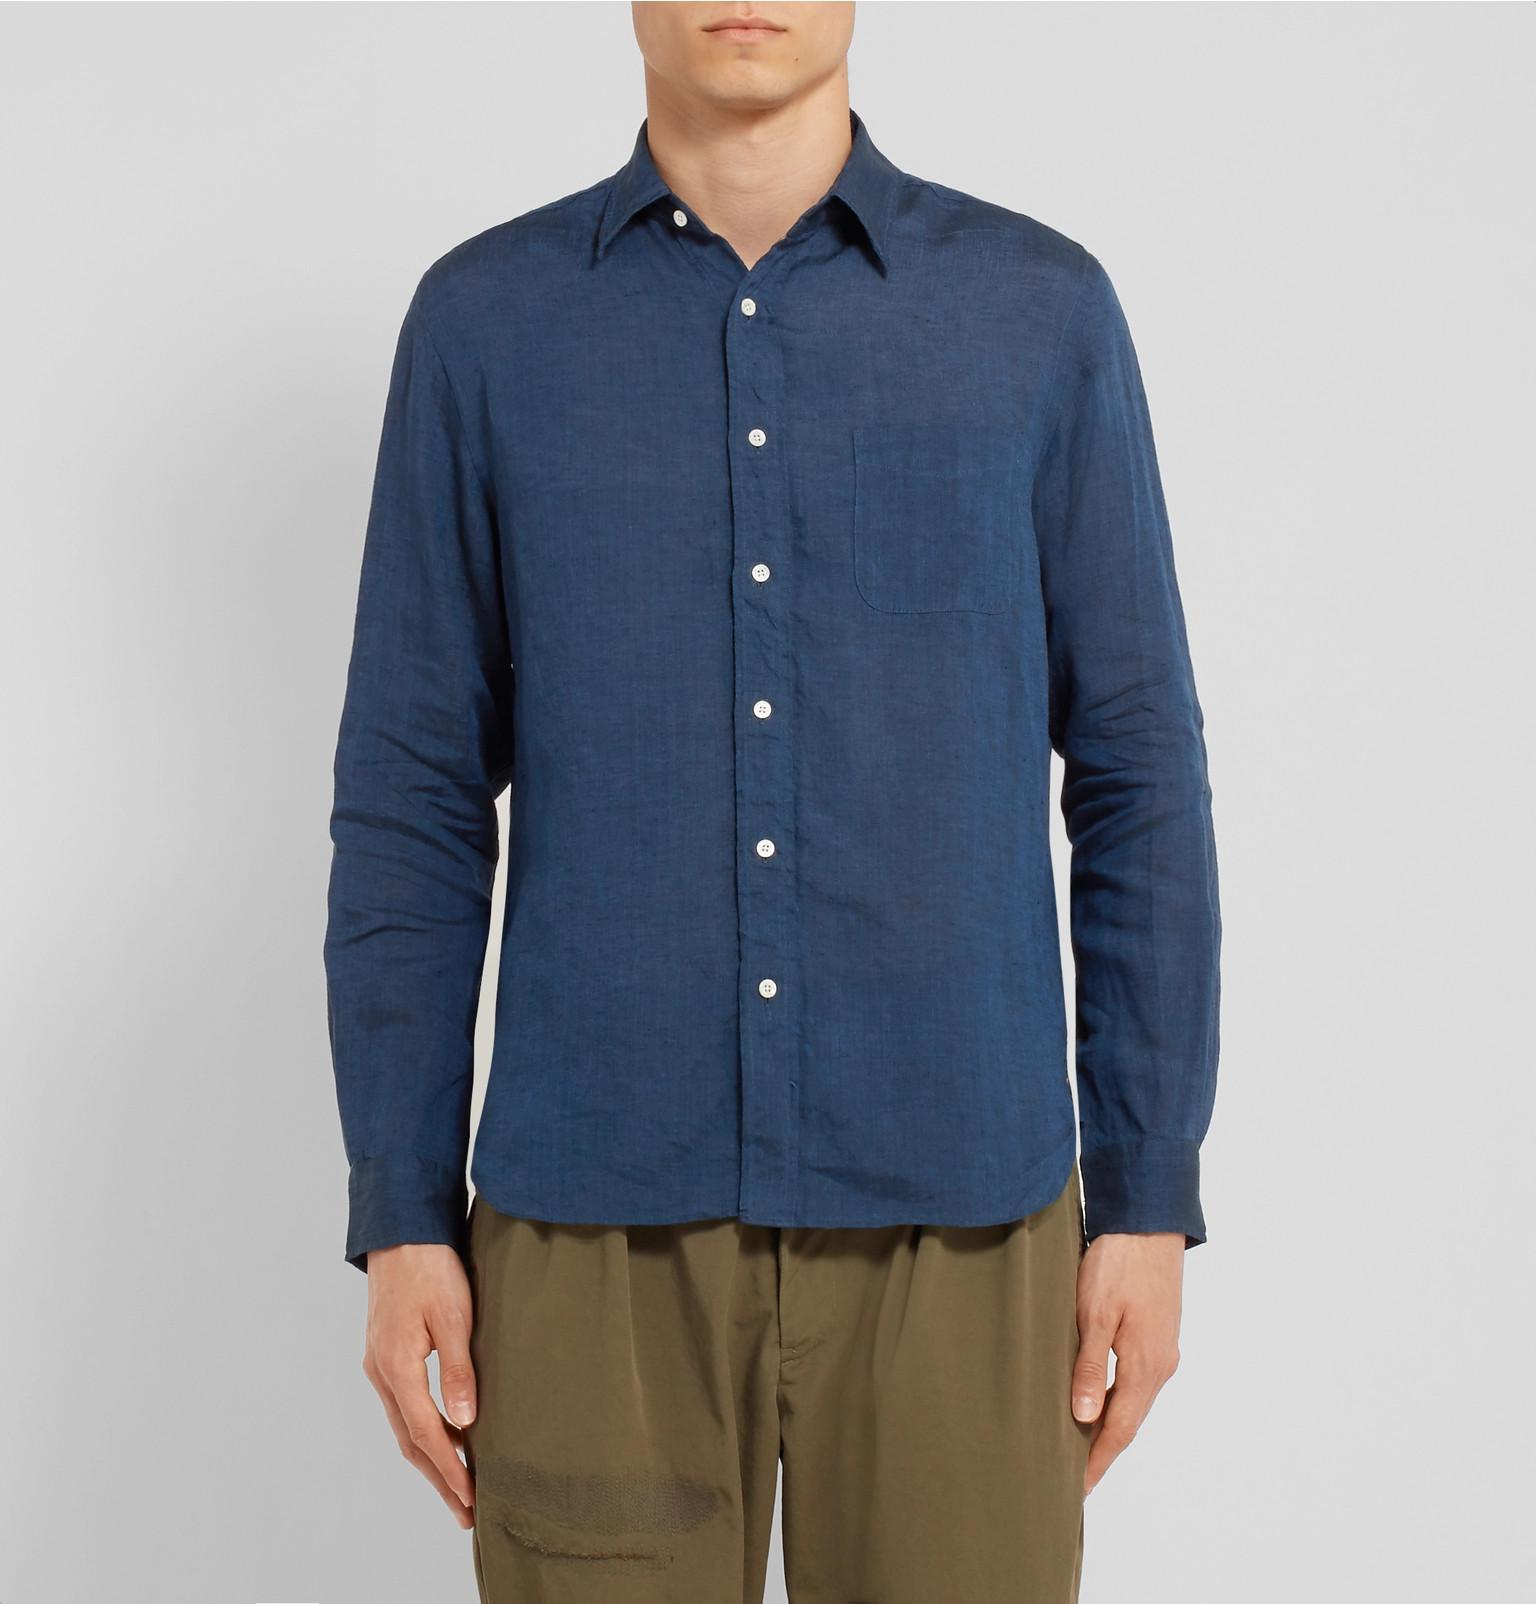 Beams Plus Linen Shirt in Blue for Men - Lyst